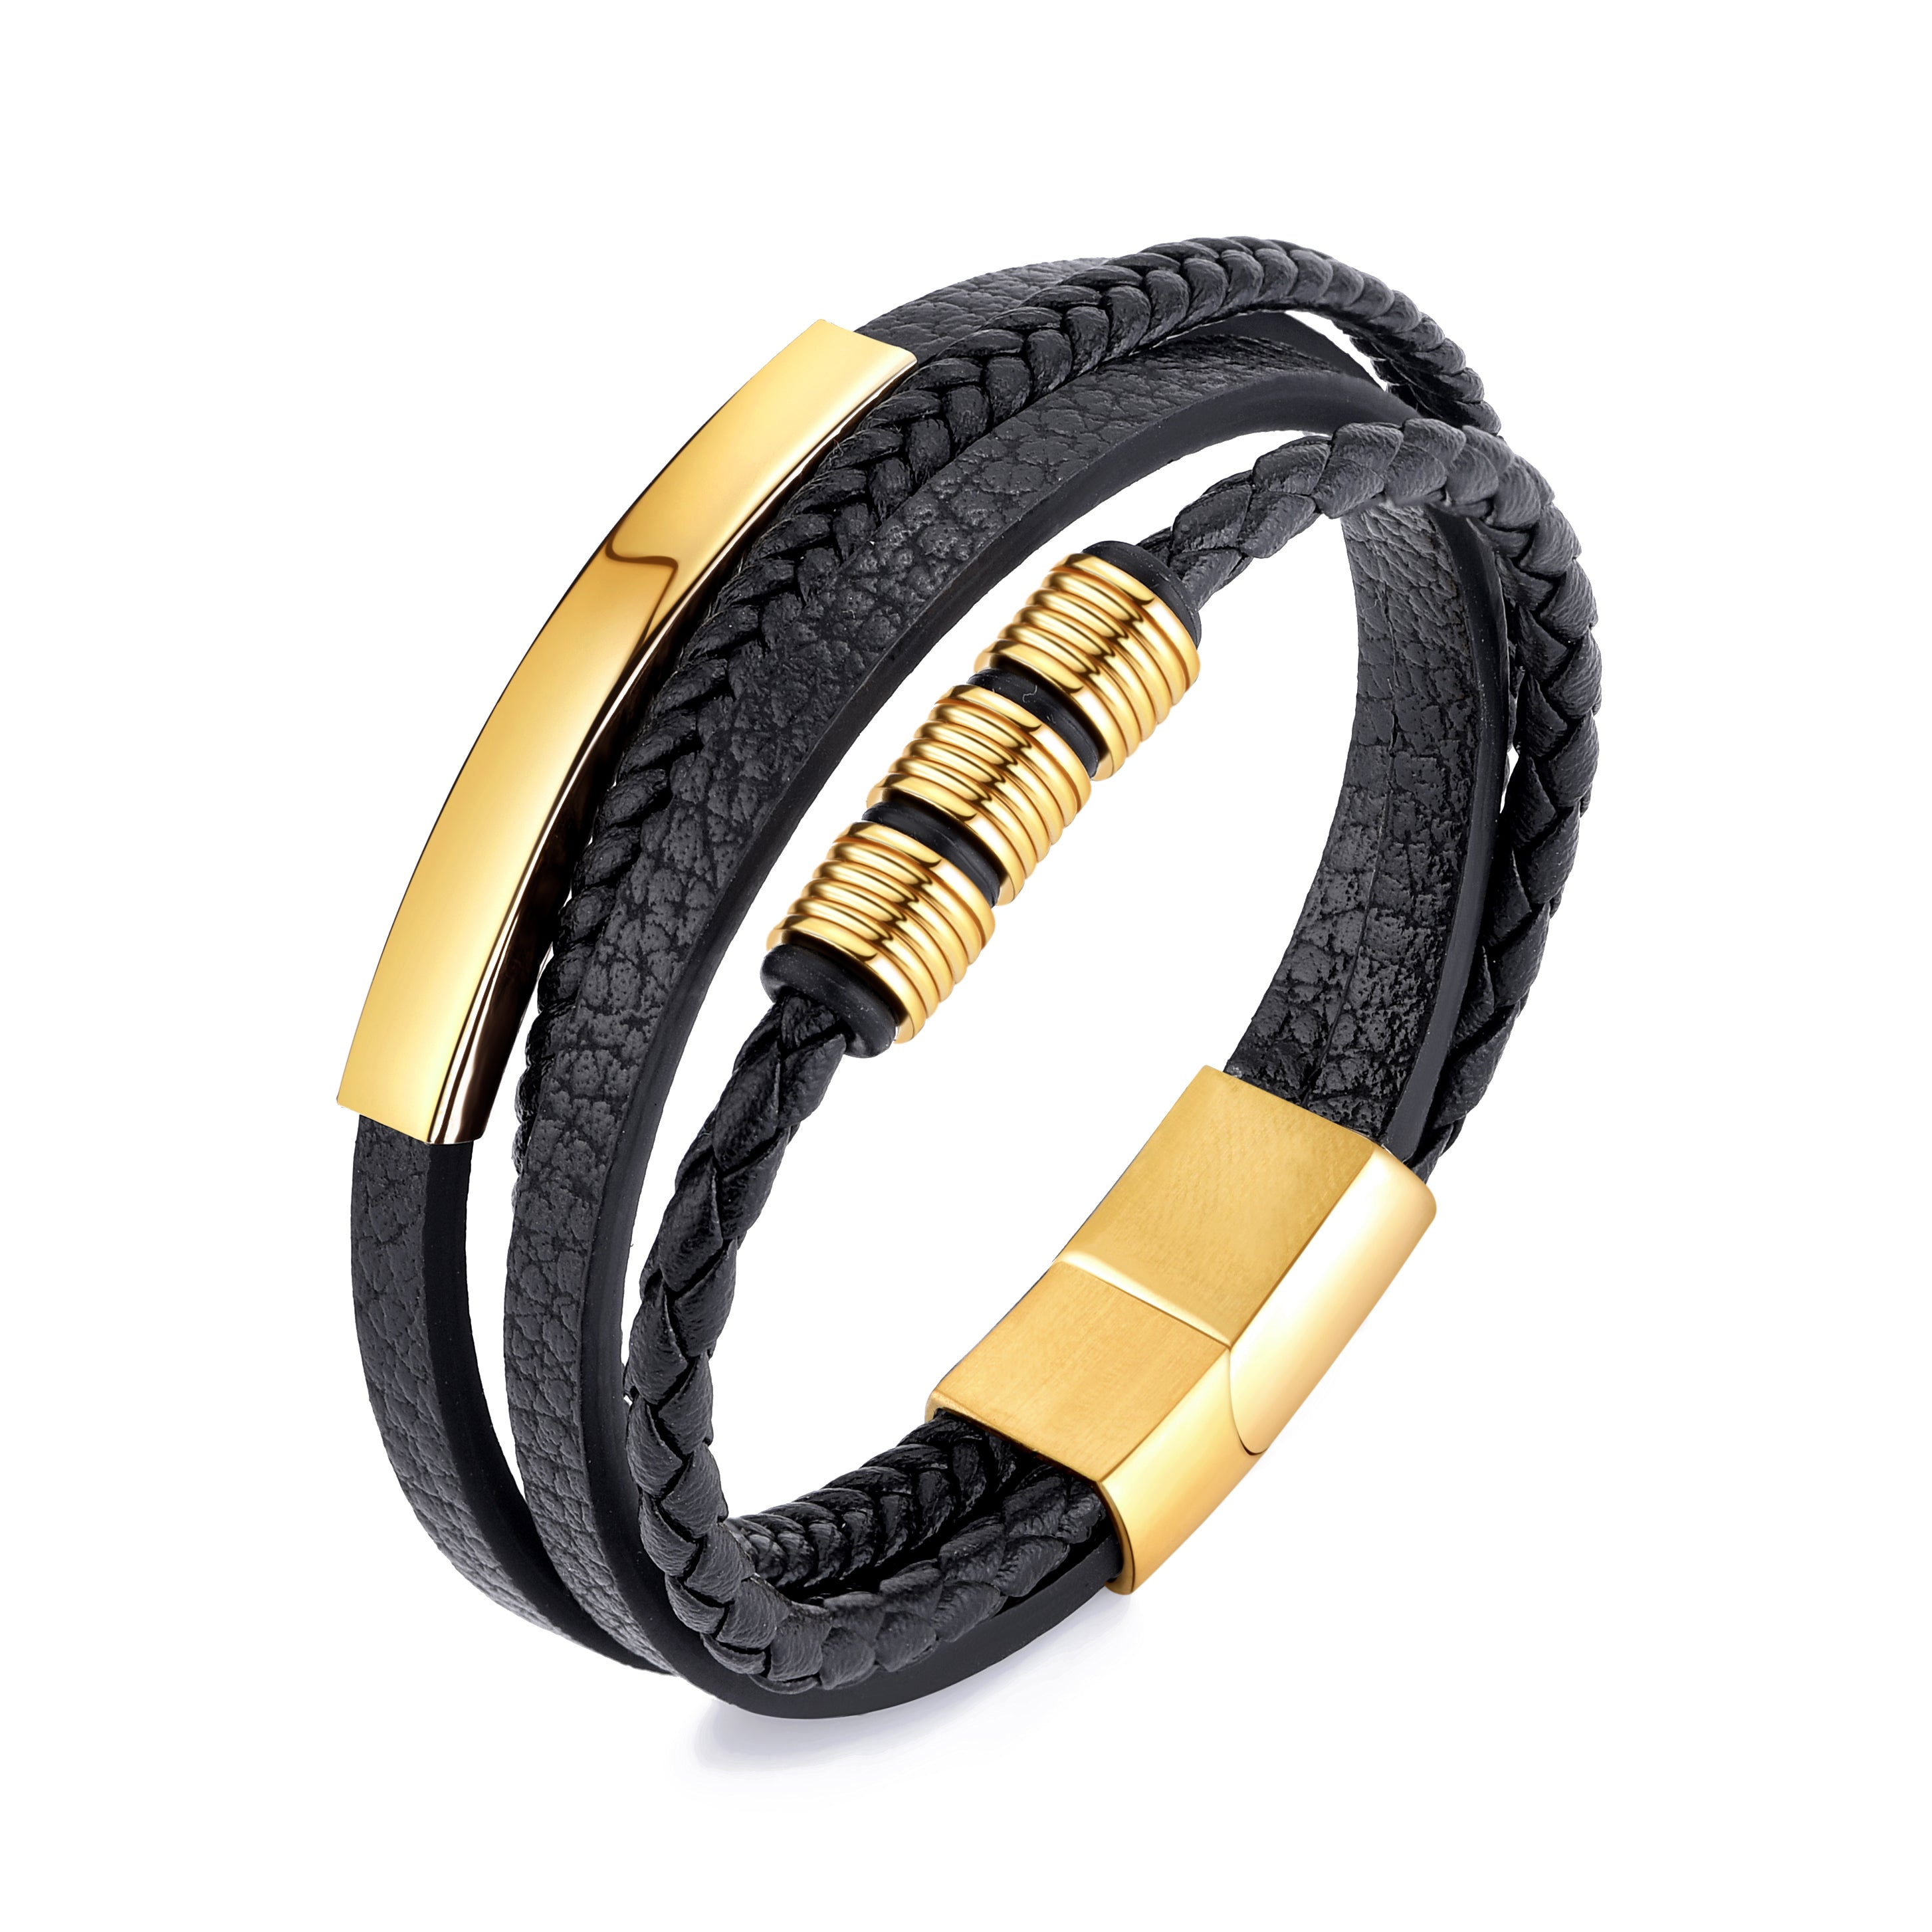 Men's Gold Plated Steel Genuine Black Leather Double Braided Bracelet